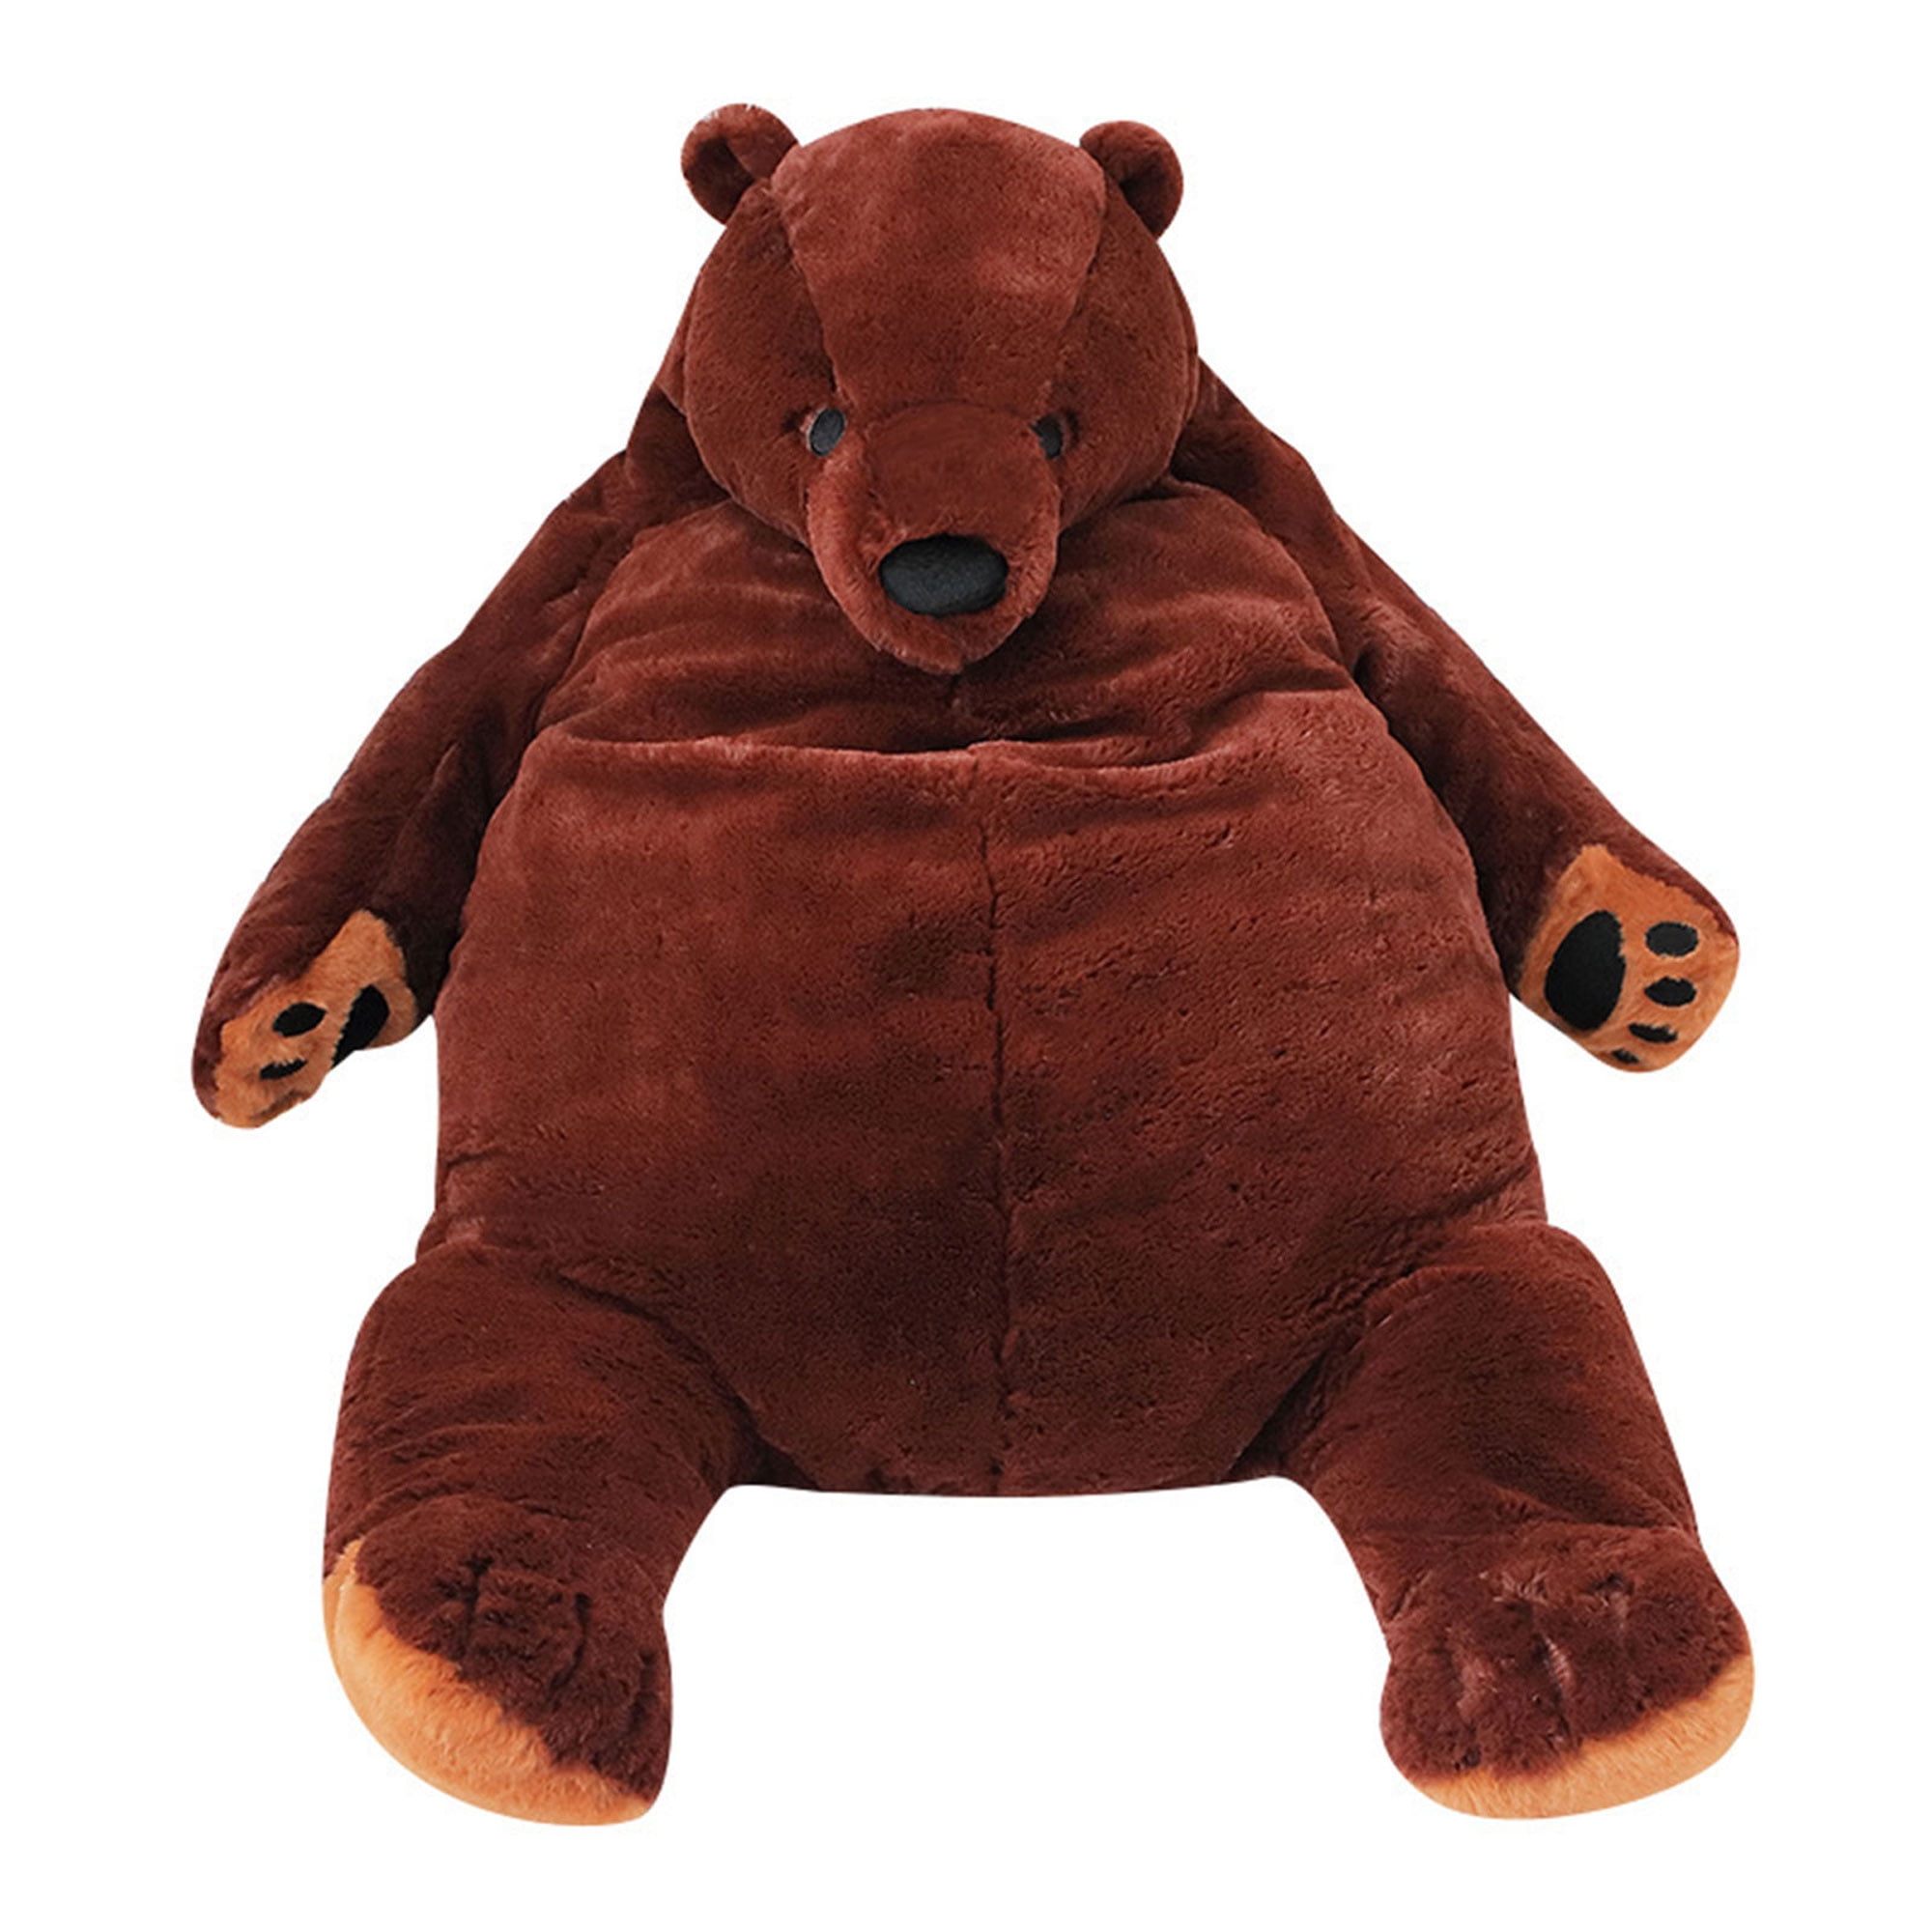 60cm Large Big Soft Pillow Plush Stuffed Elephant Animal Toy Teddy Bear kids 